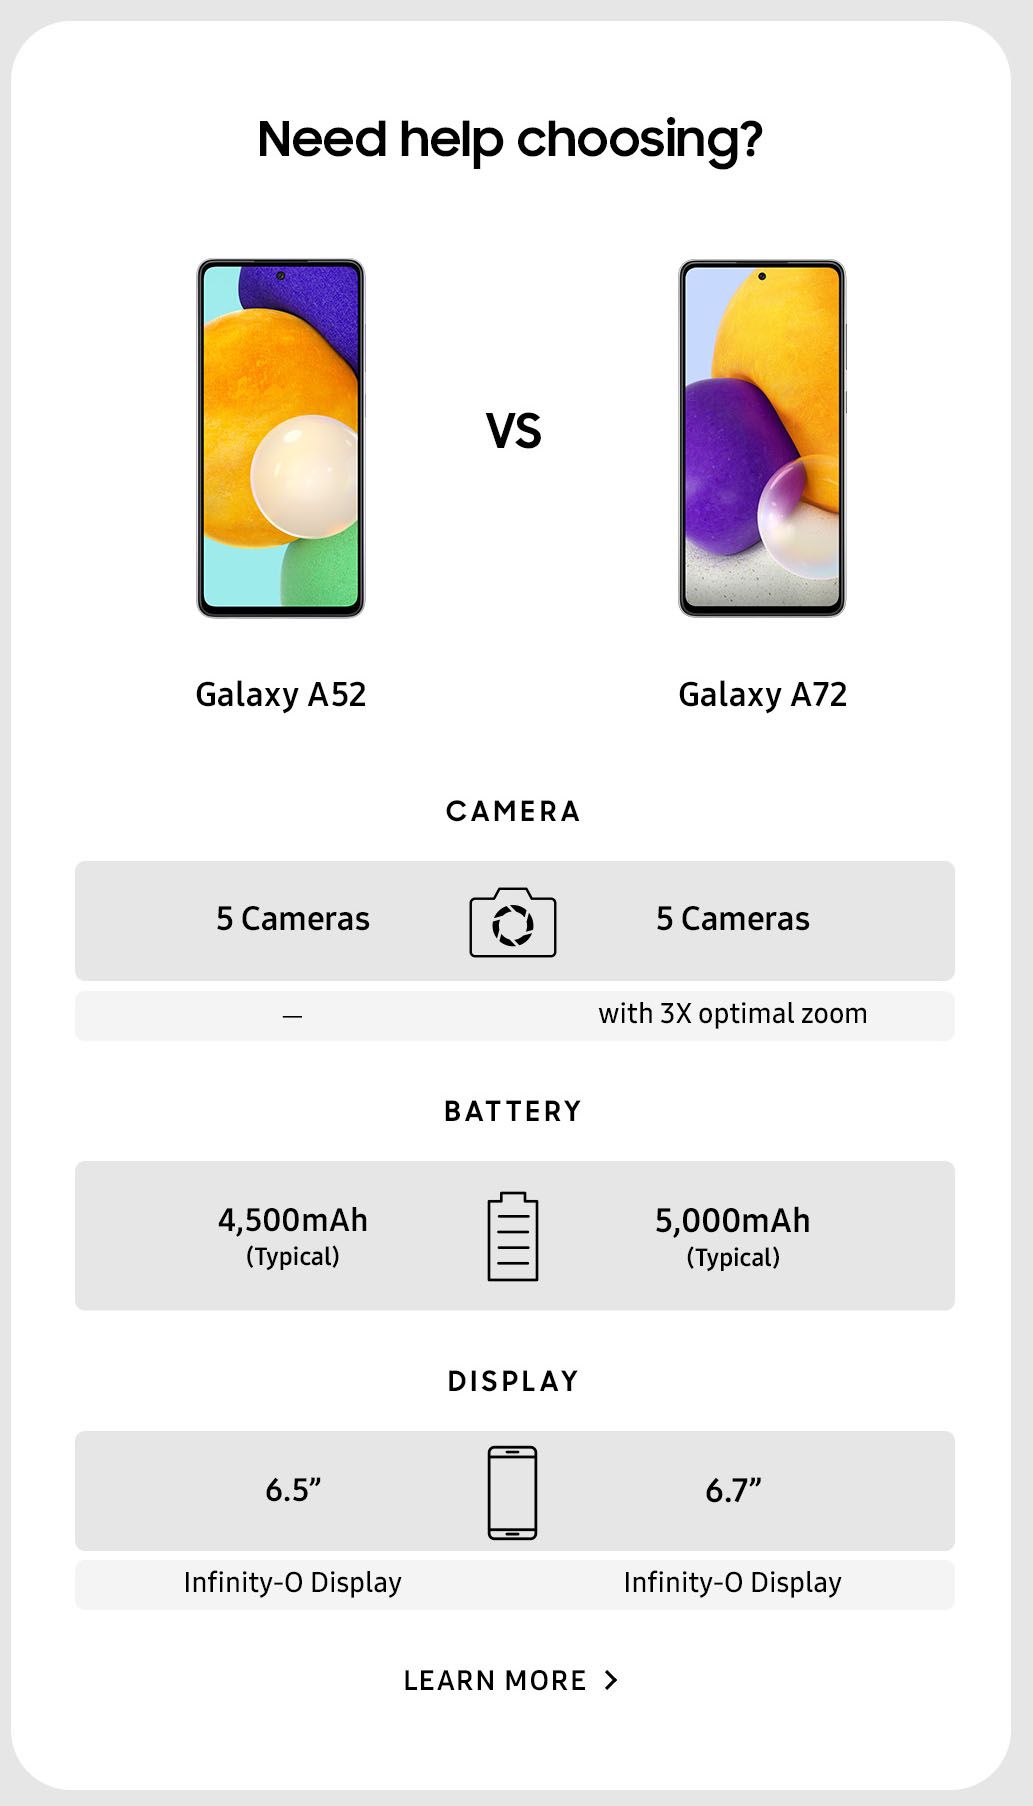 Samsung Galaxy A72 52 marketing material leak 5